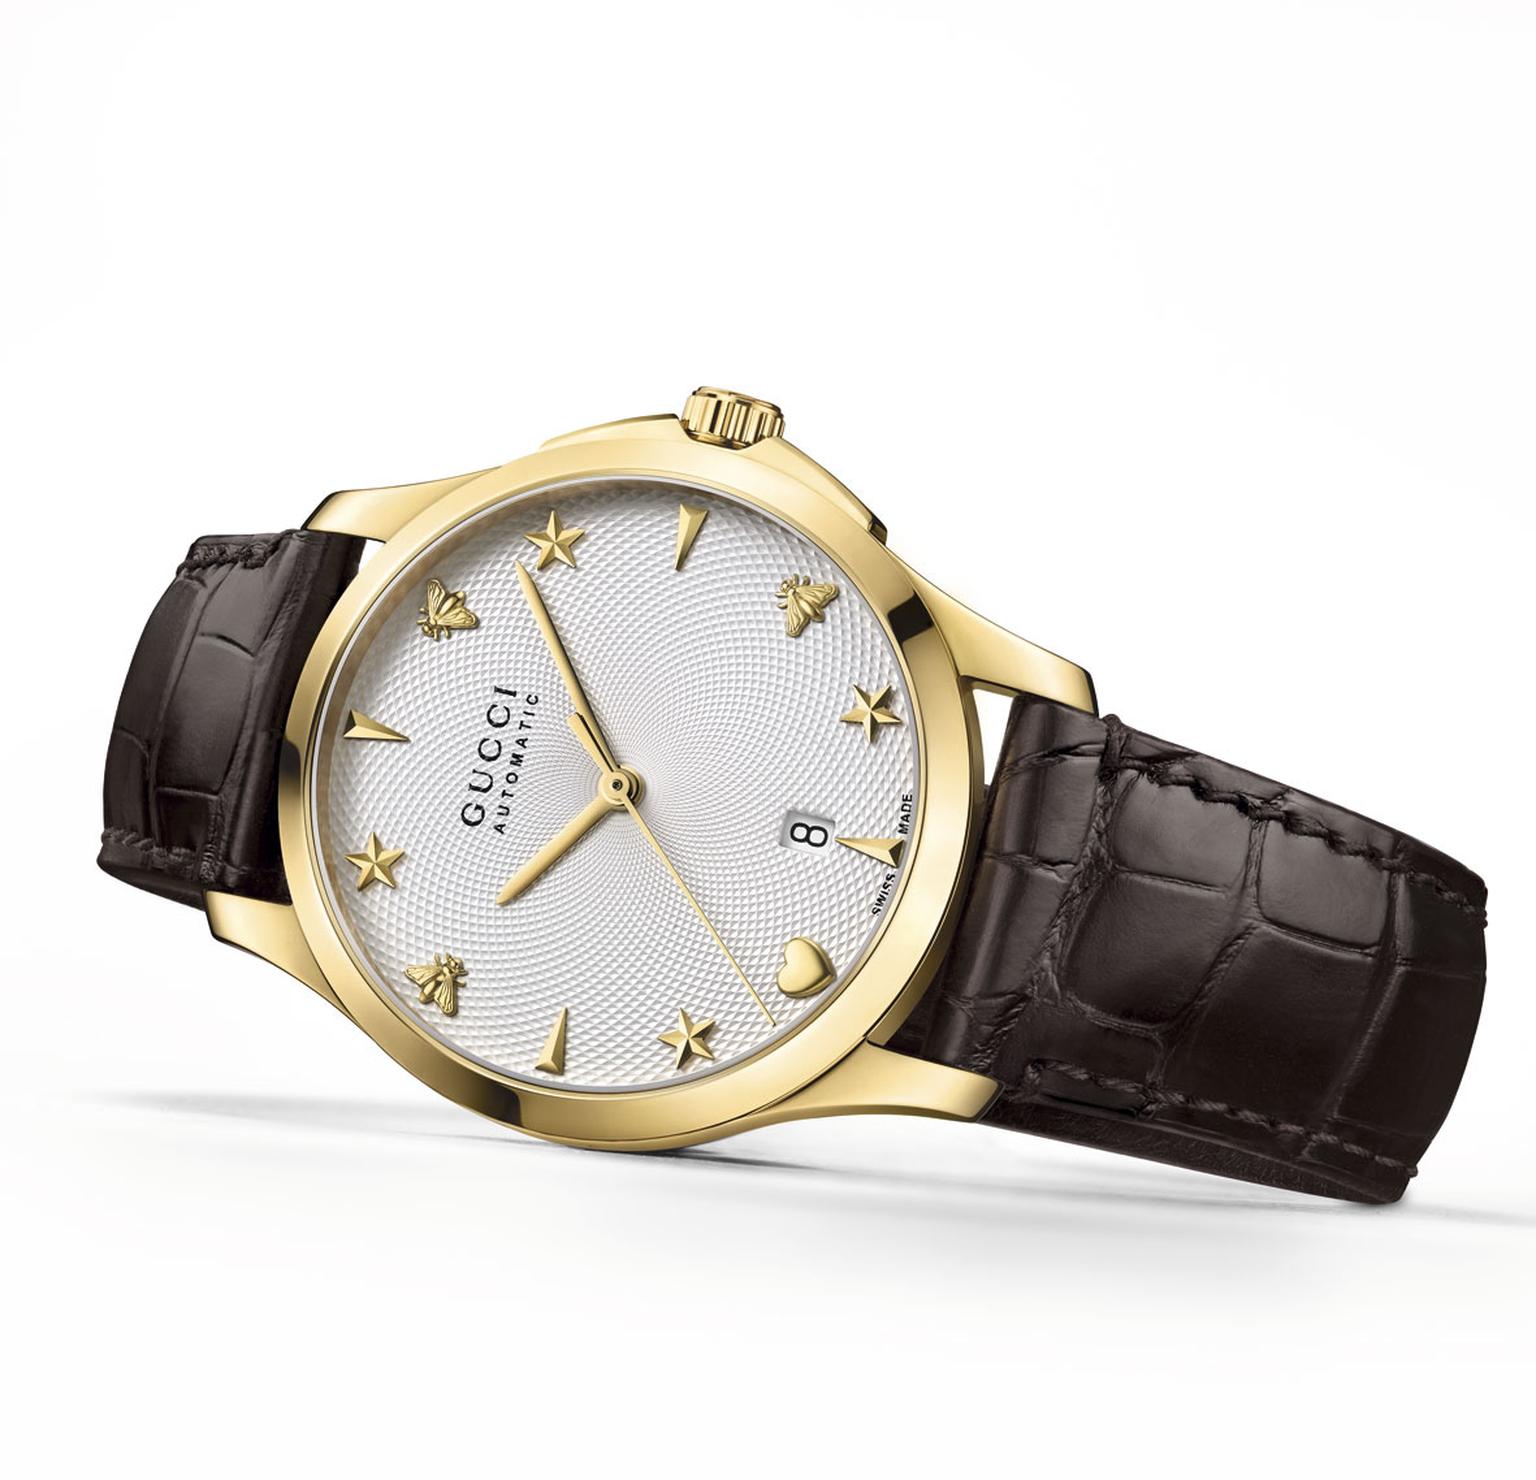 Gucci G-Timeless Automatic watch